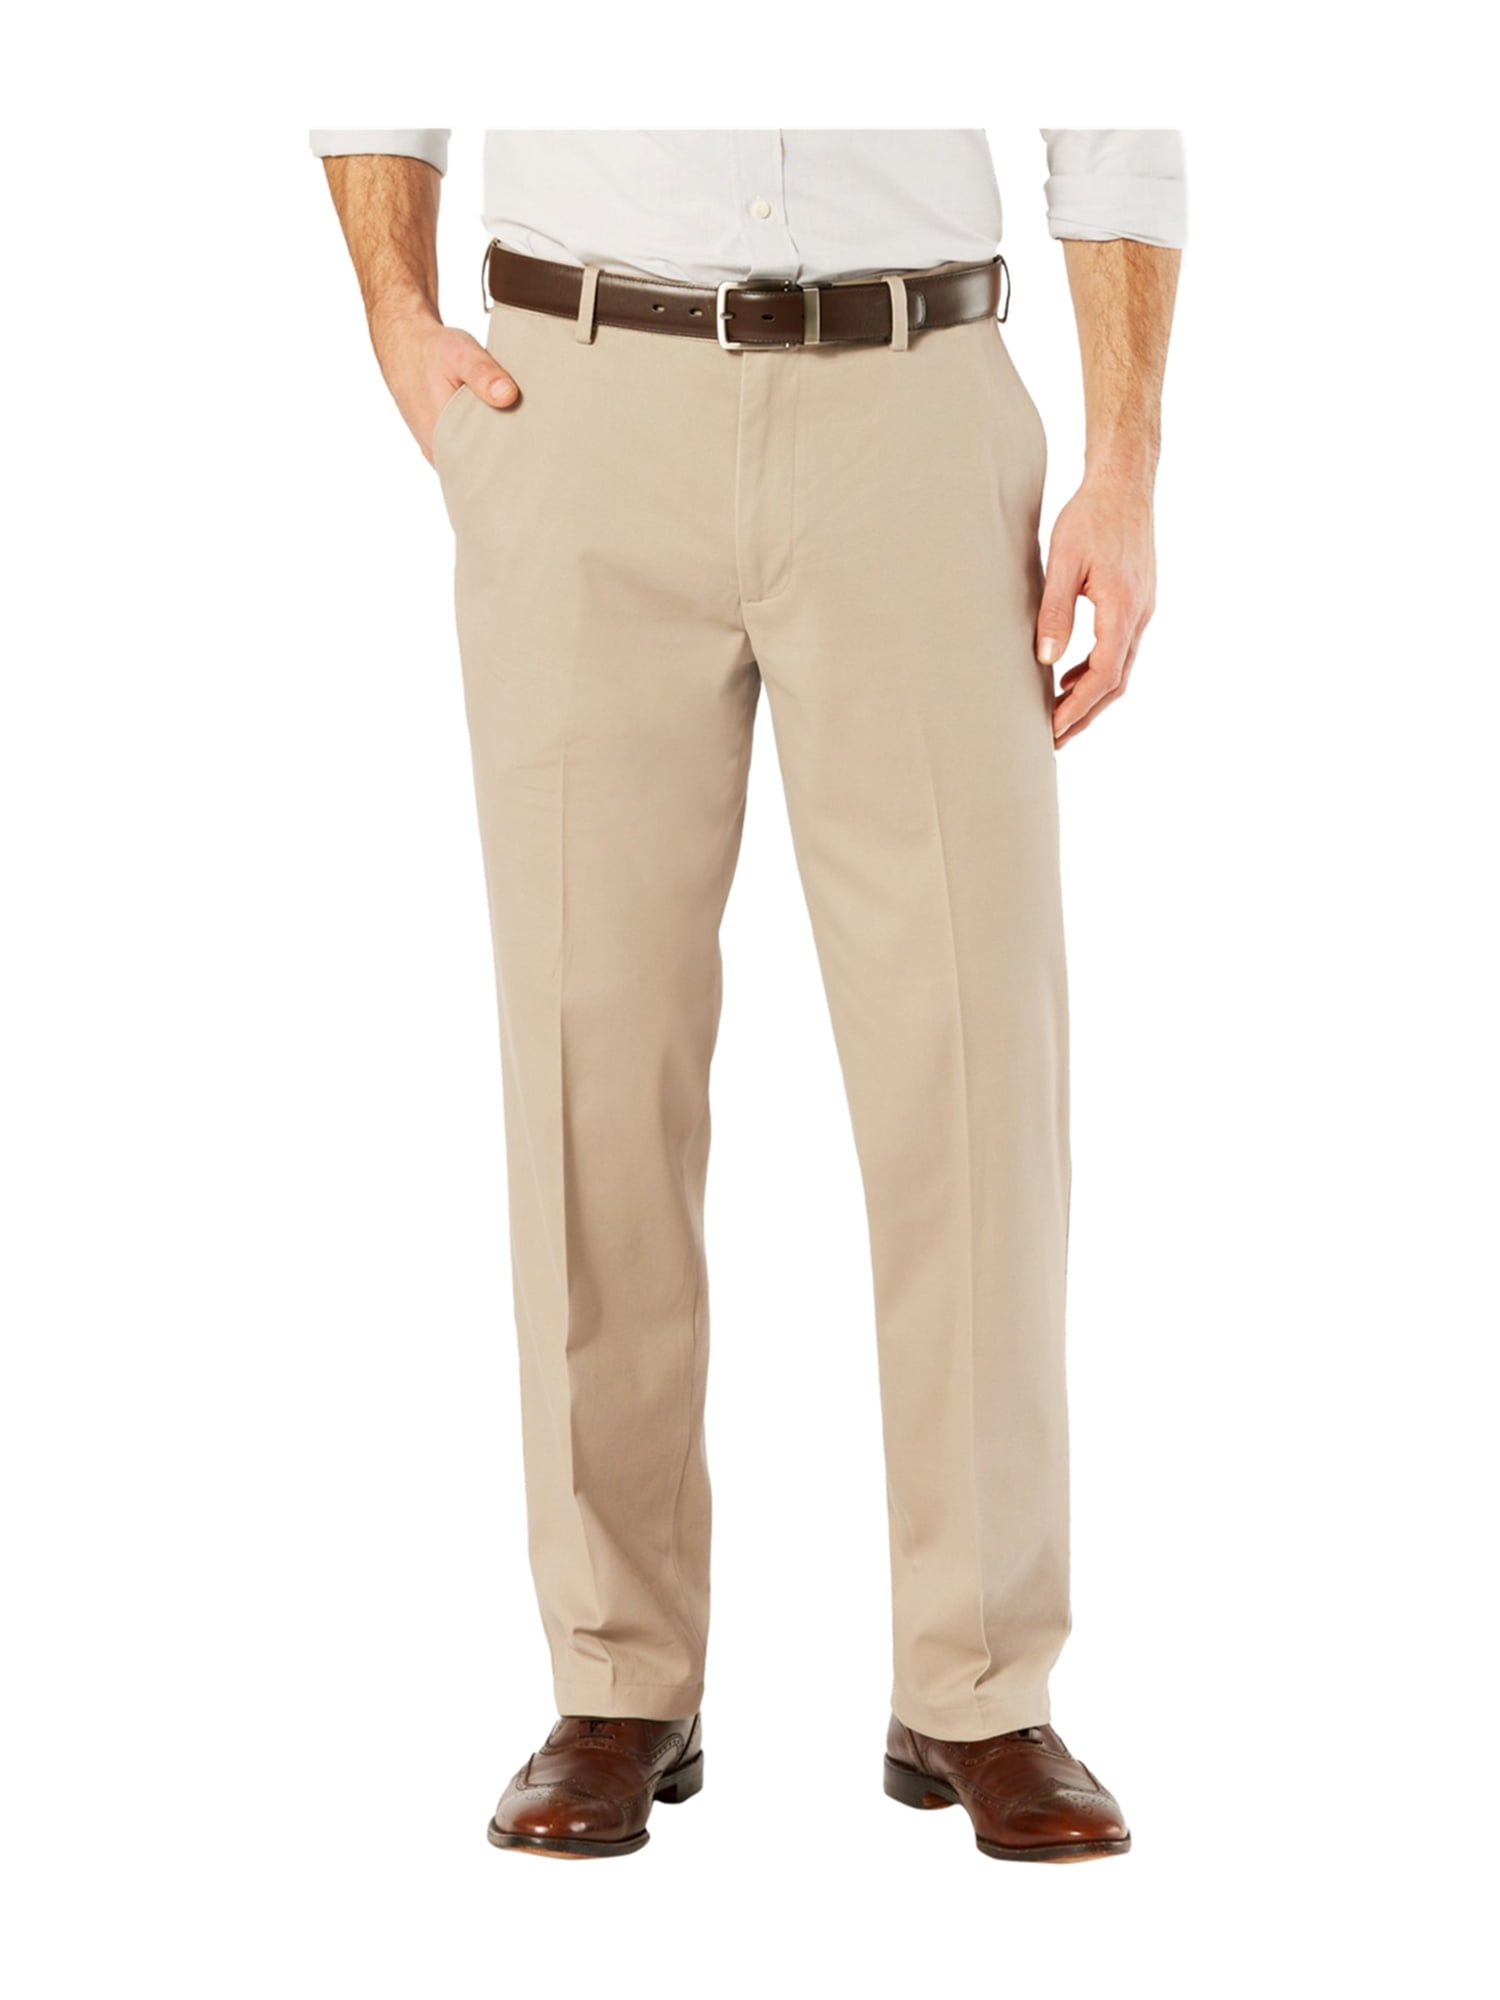 Dockers Mens Comfort Khaki Casual Chino Pants khaki 38x32 | Walmart Canada